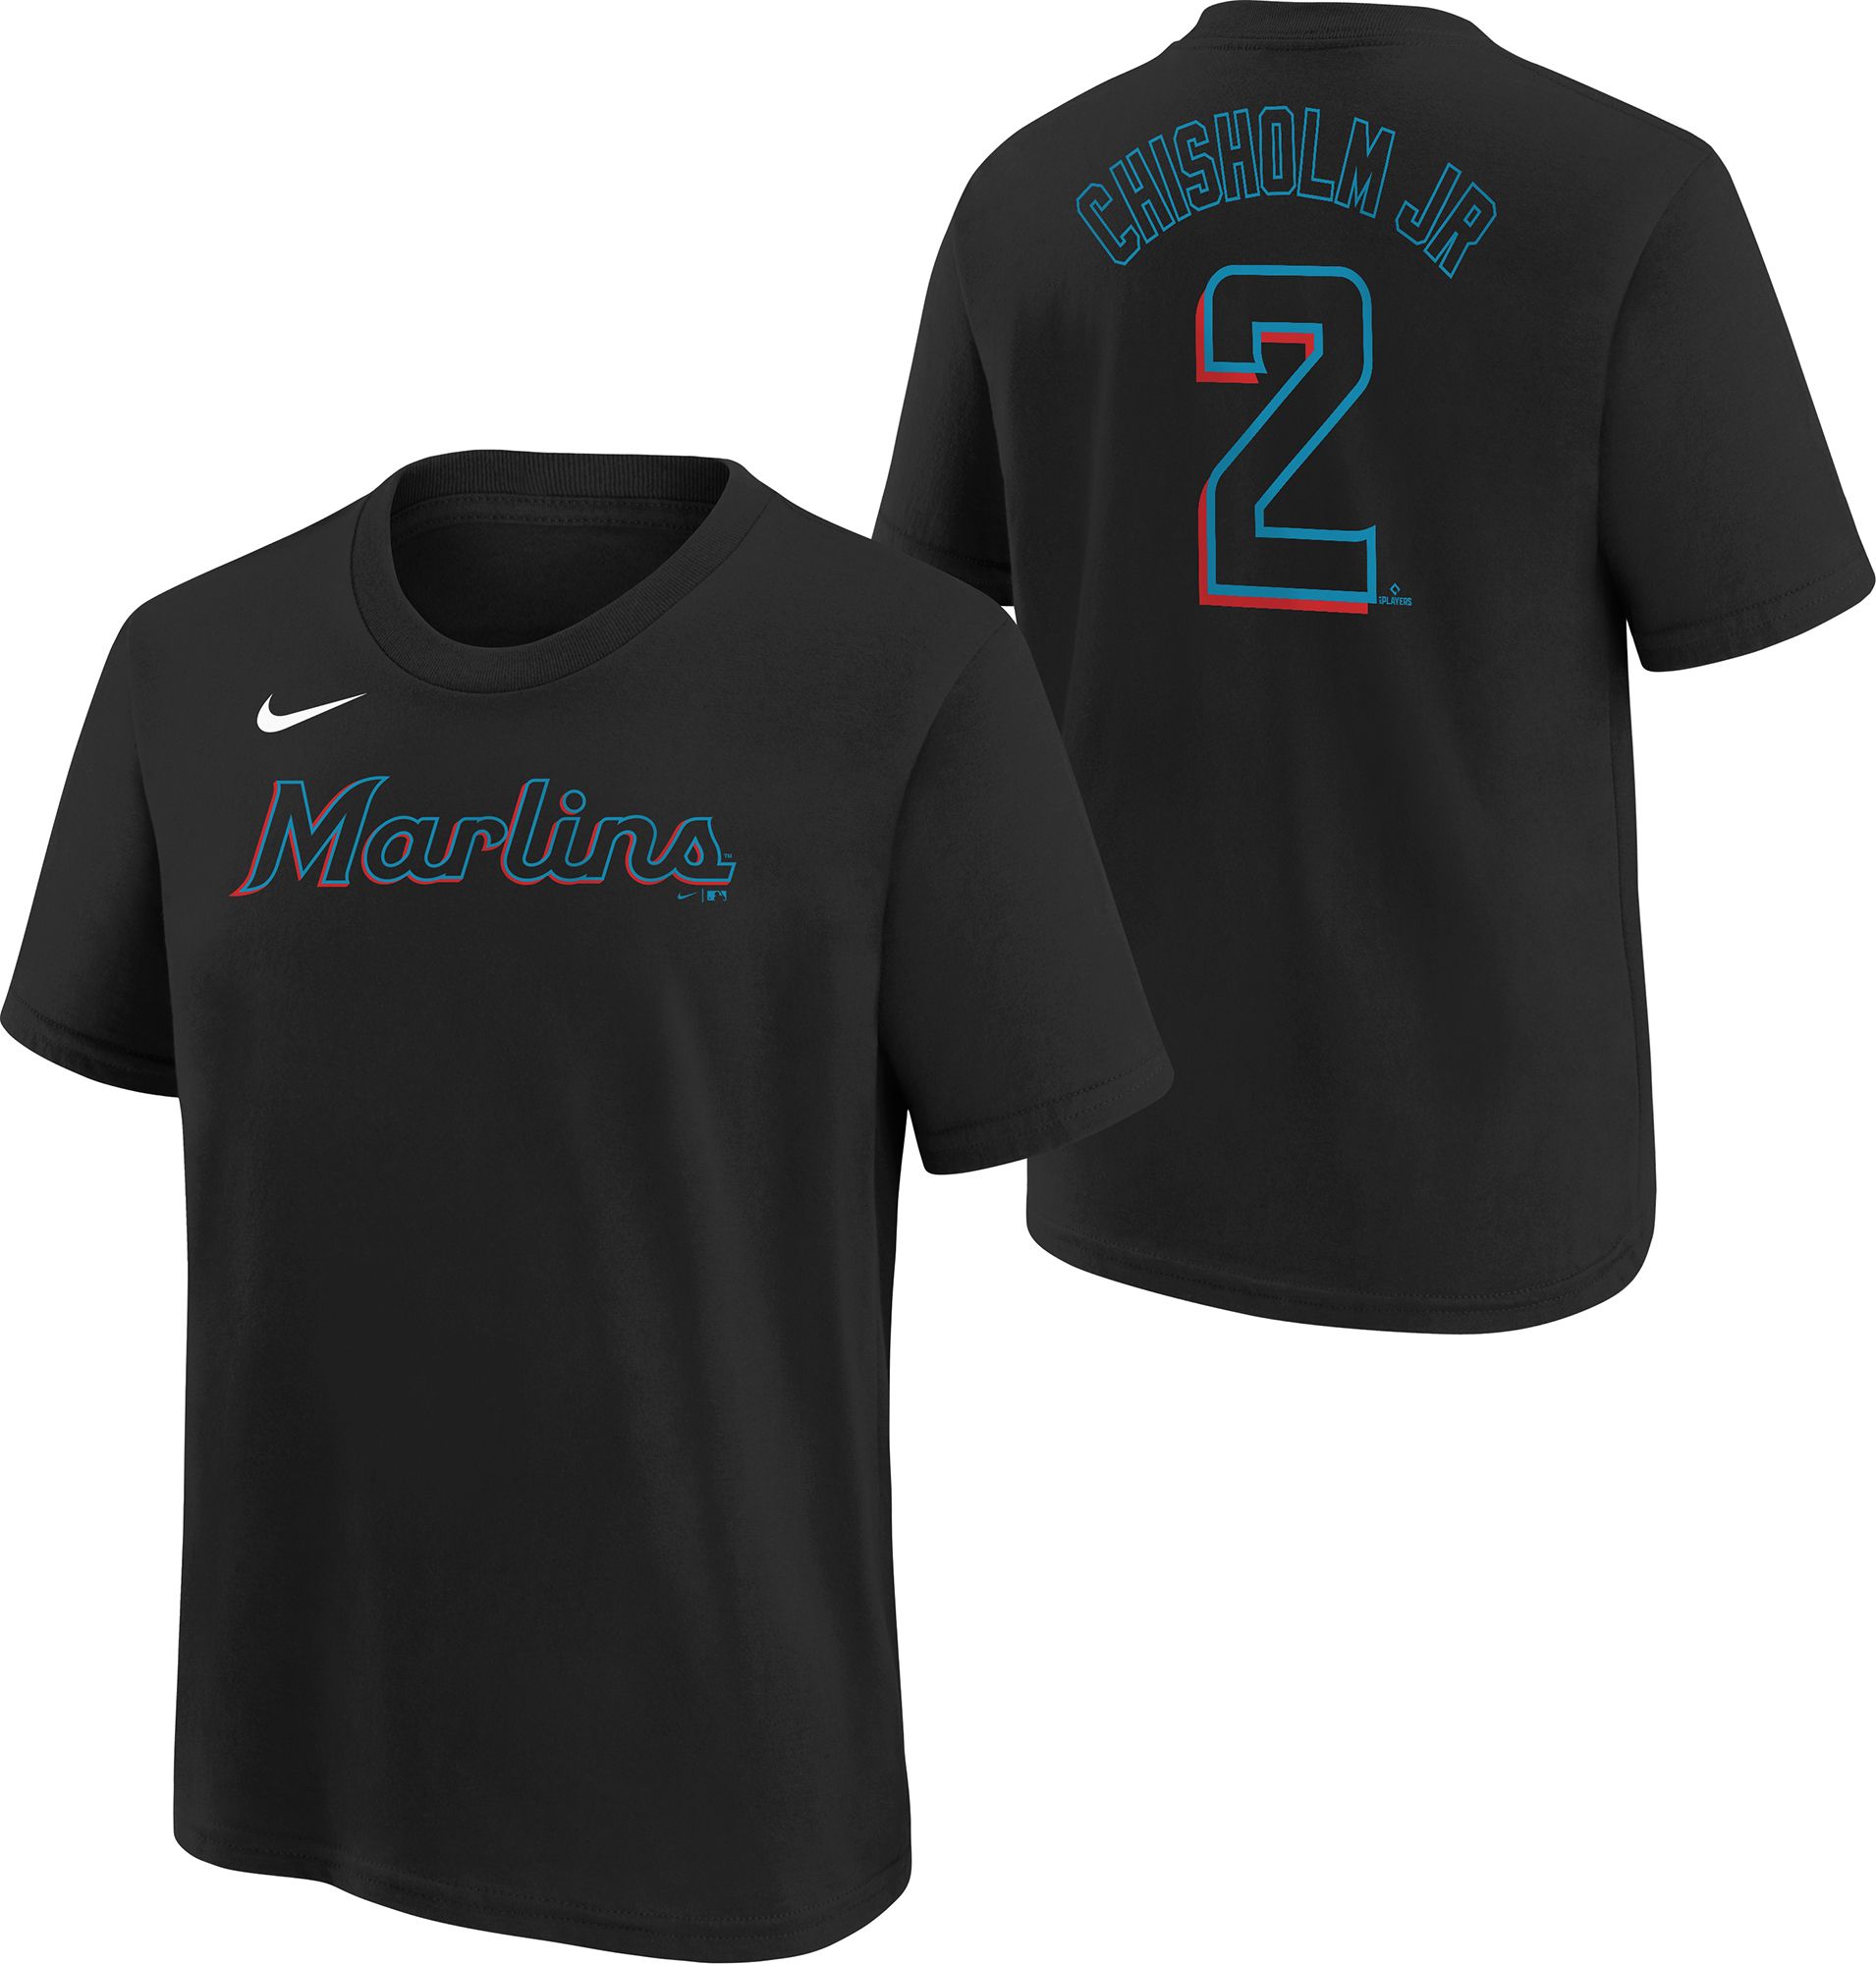 Nike / Youth Miami Marlins Jazz Chisholm #2 Black T-Shirt